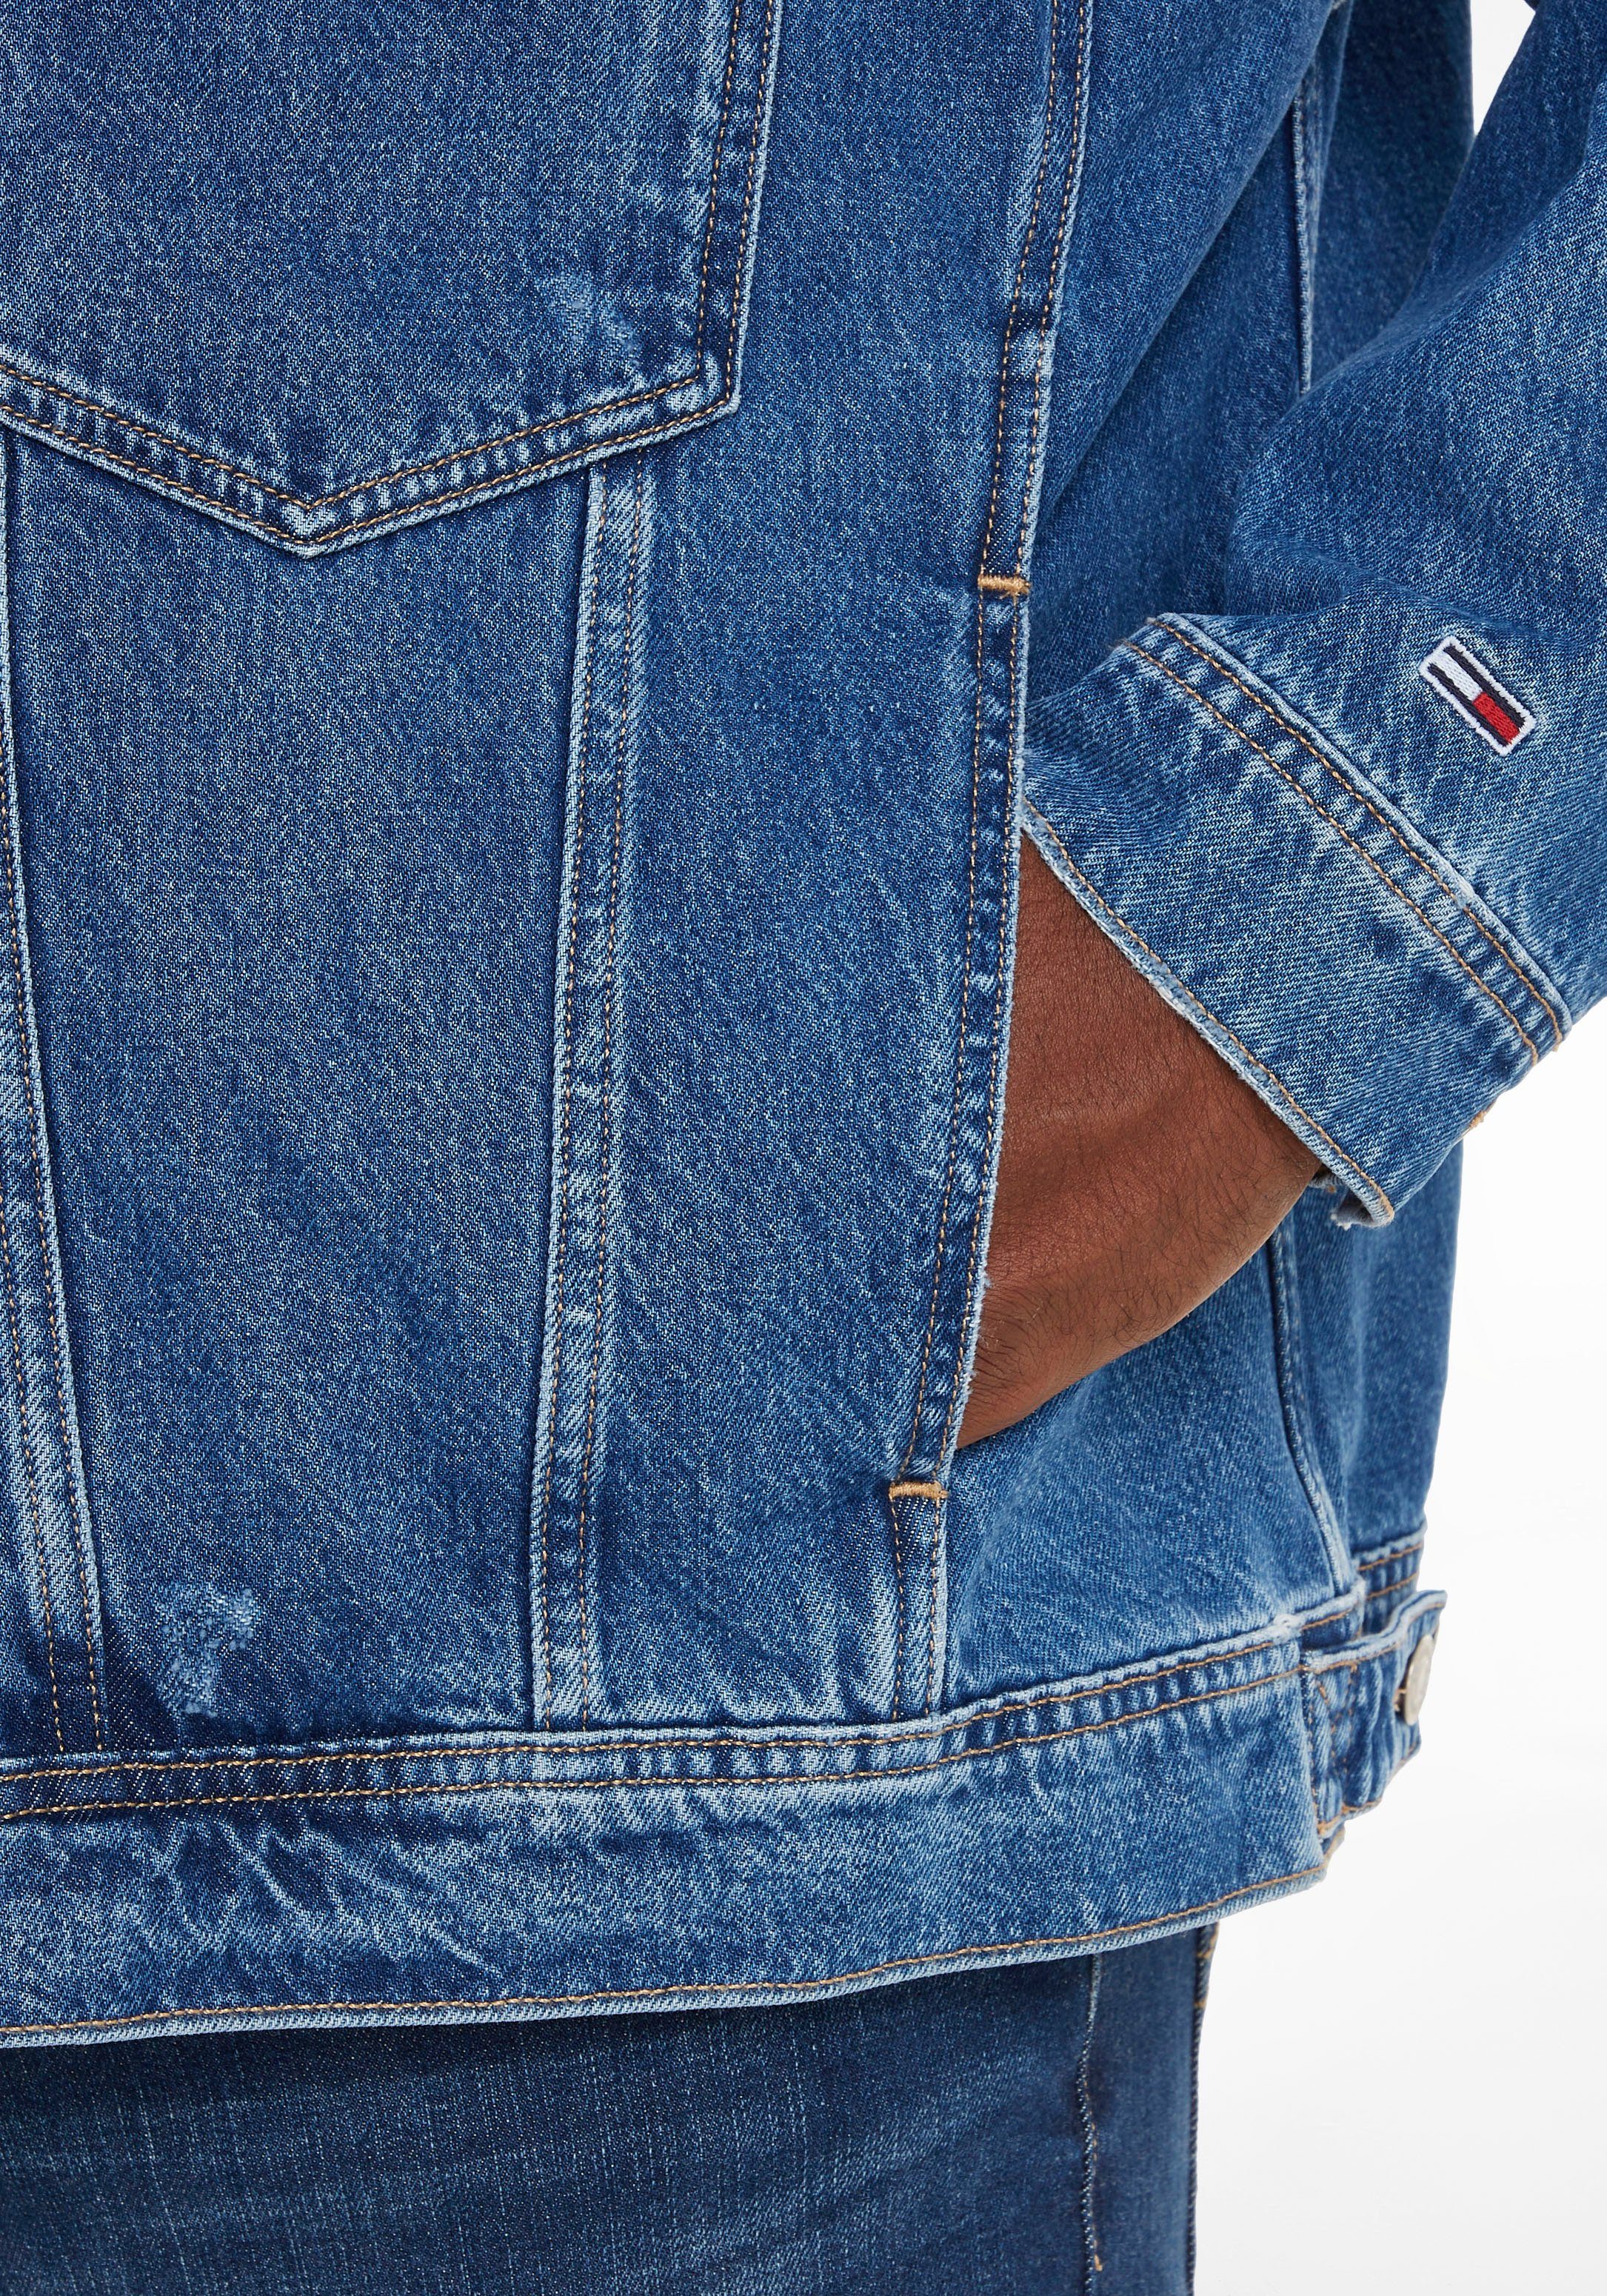 Jeansjacke PLUS DNM mit BG0032 OVERSIZE Knopfverschluss Jeans Tommy JKT Plus